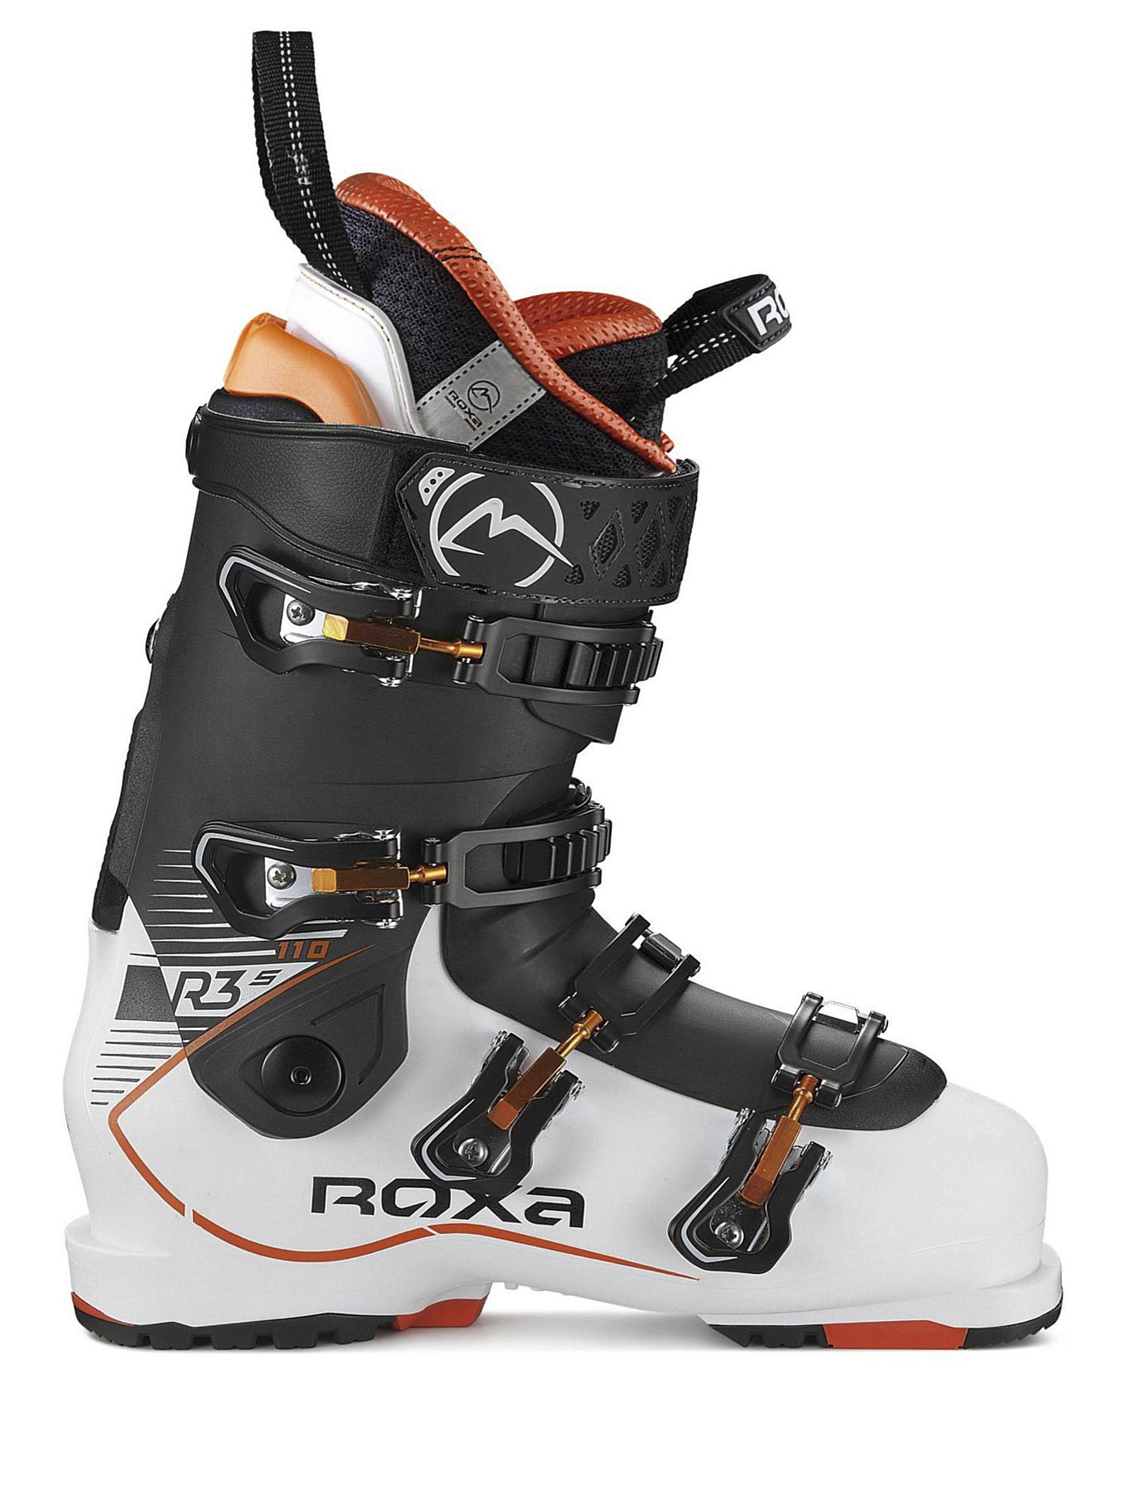 Горнолыжные ботинки ROXA R3s 110 White/black